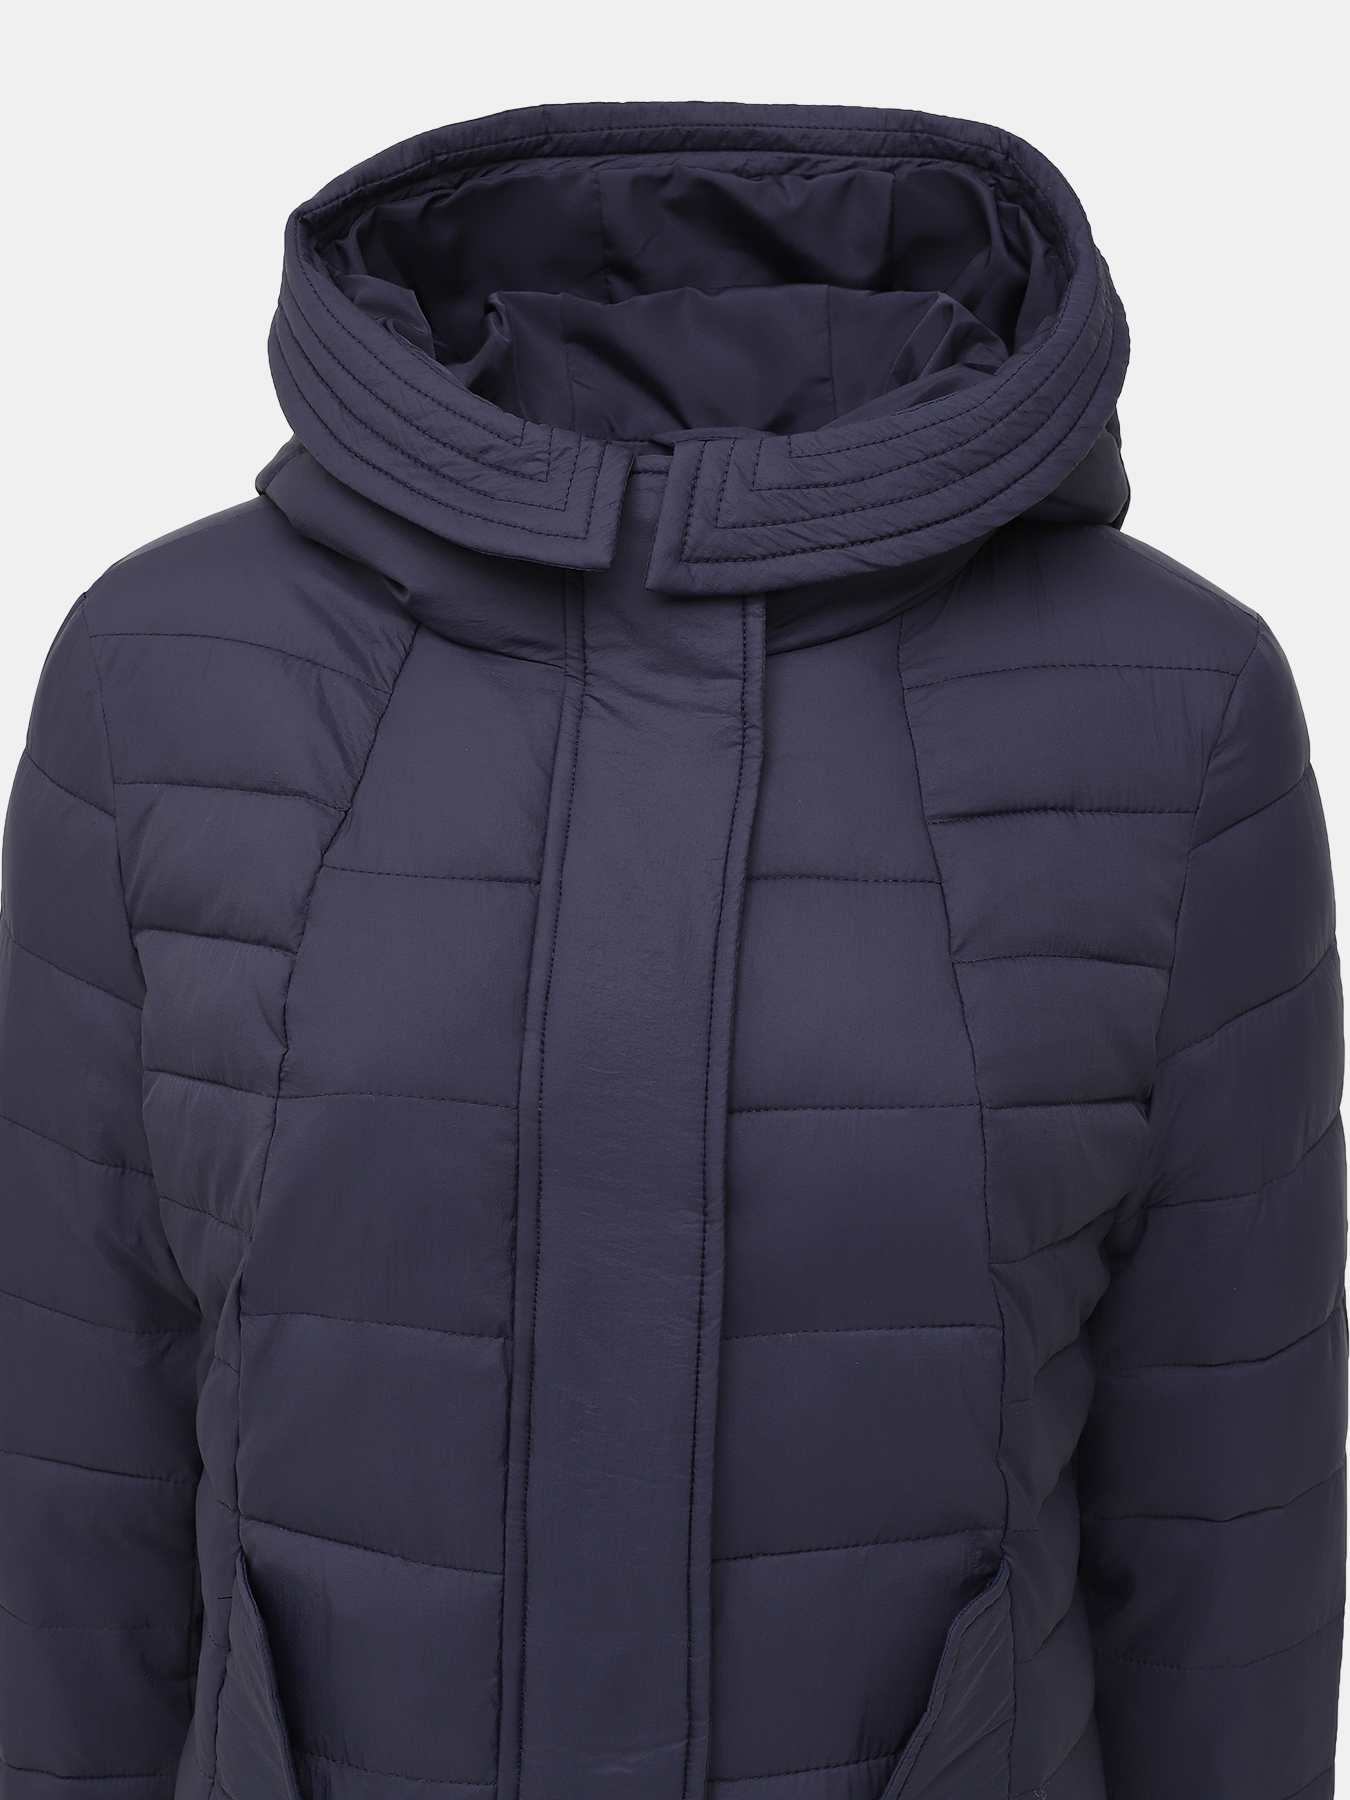 Пальто зимнее Alessandro Manzoni Purpur 384503-193, цвет темно-синий, размер 50-52 - фото 3